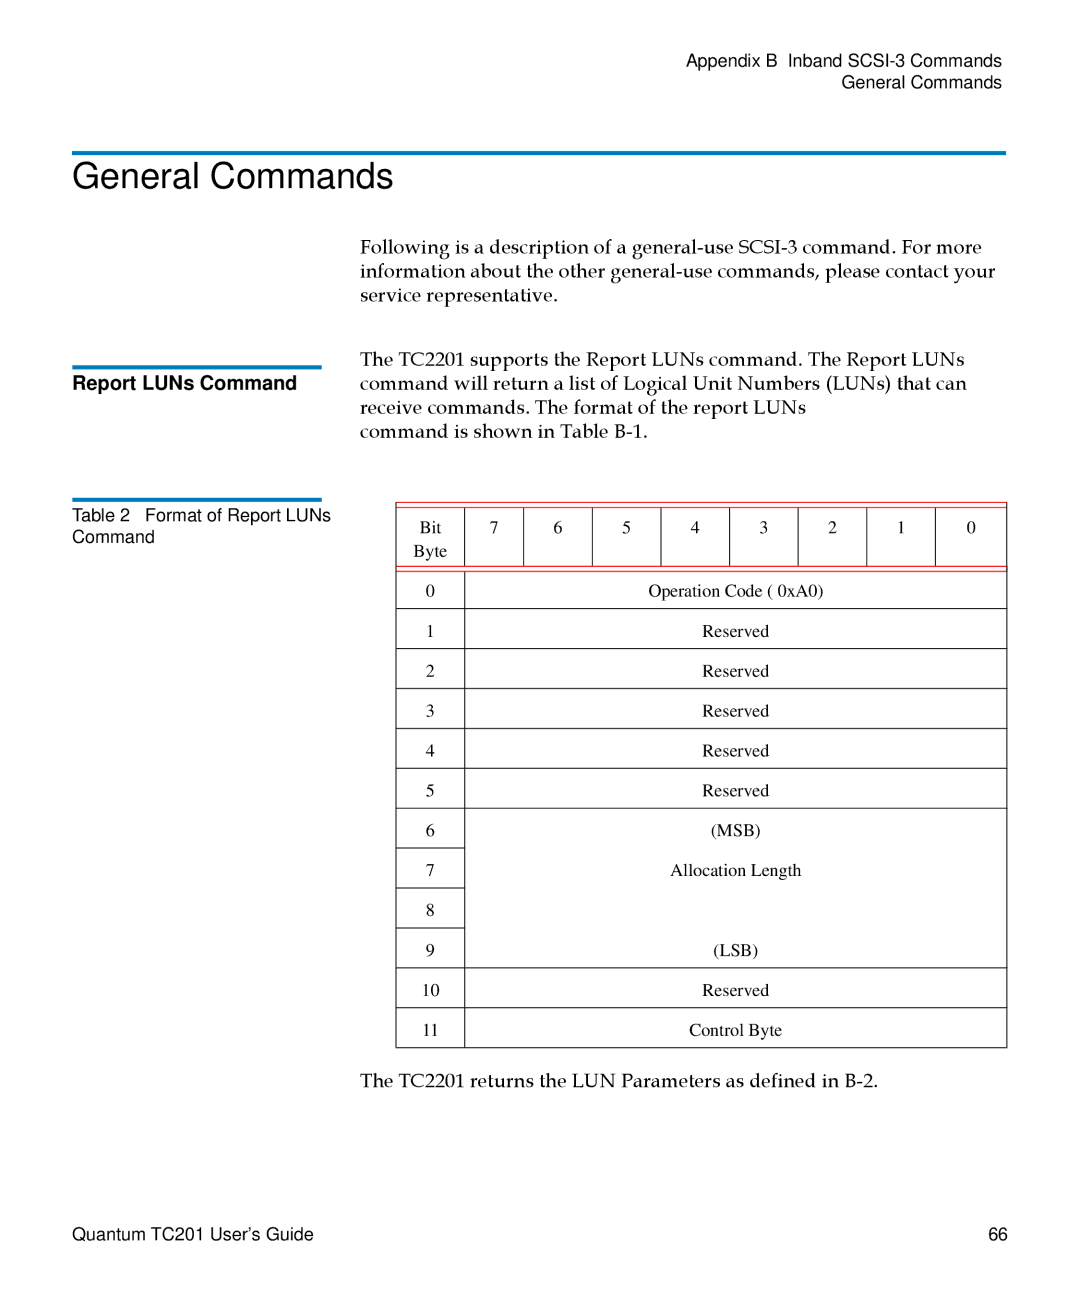 Quantum manual General Commands, TC2201 returns the LUN Parameters as defined in B-2 